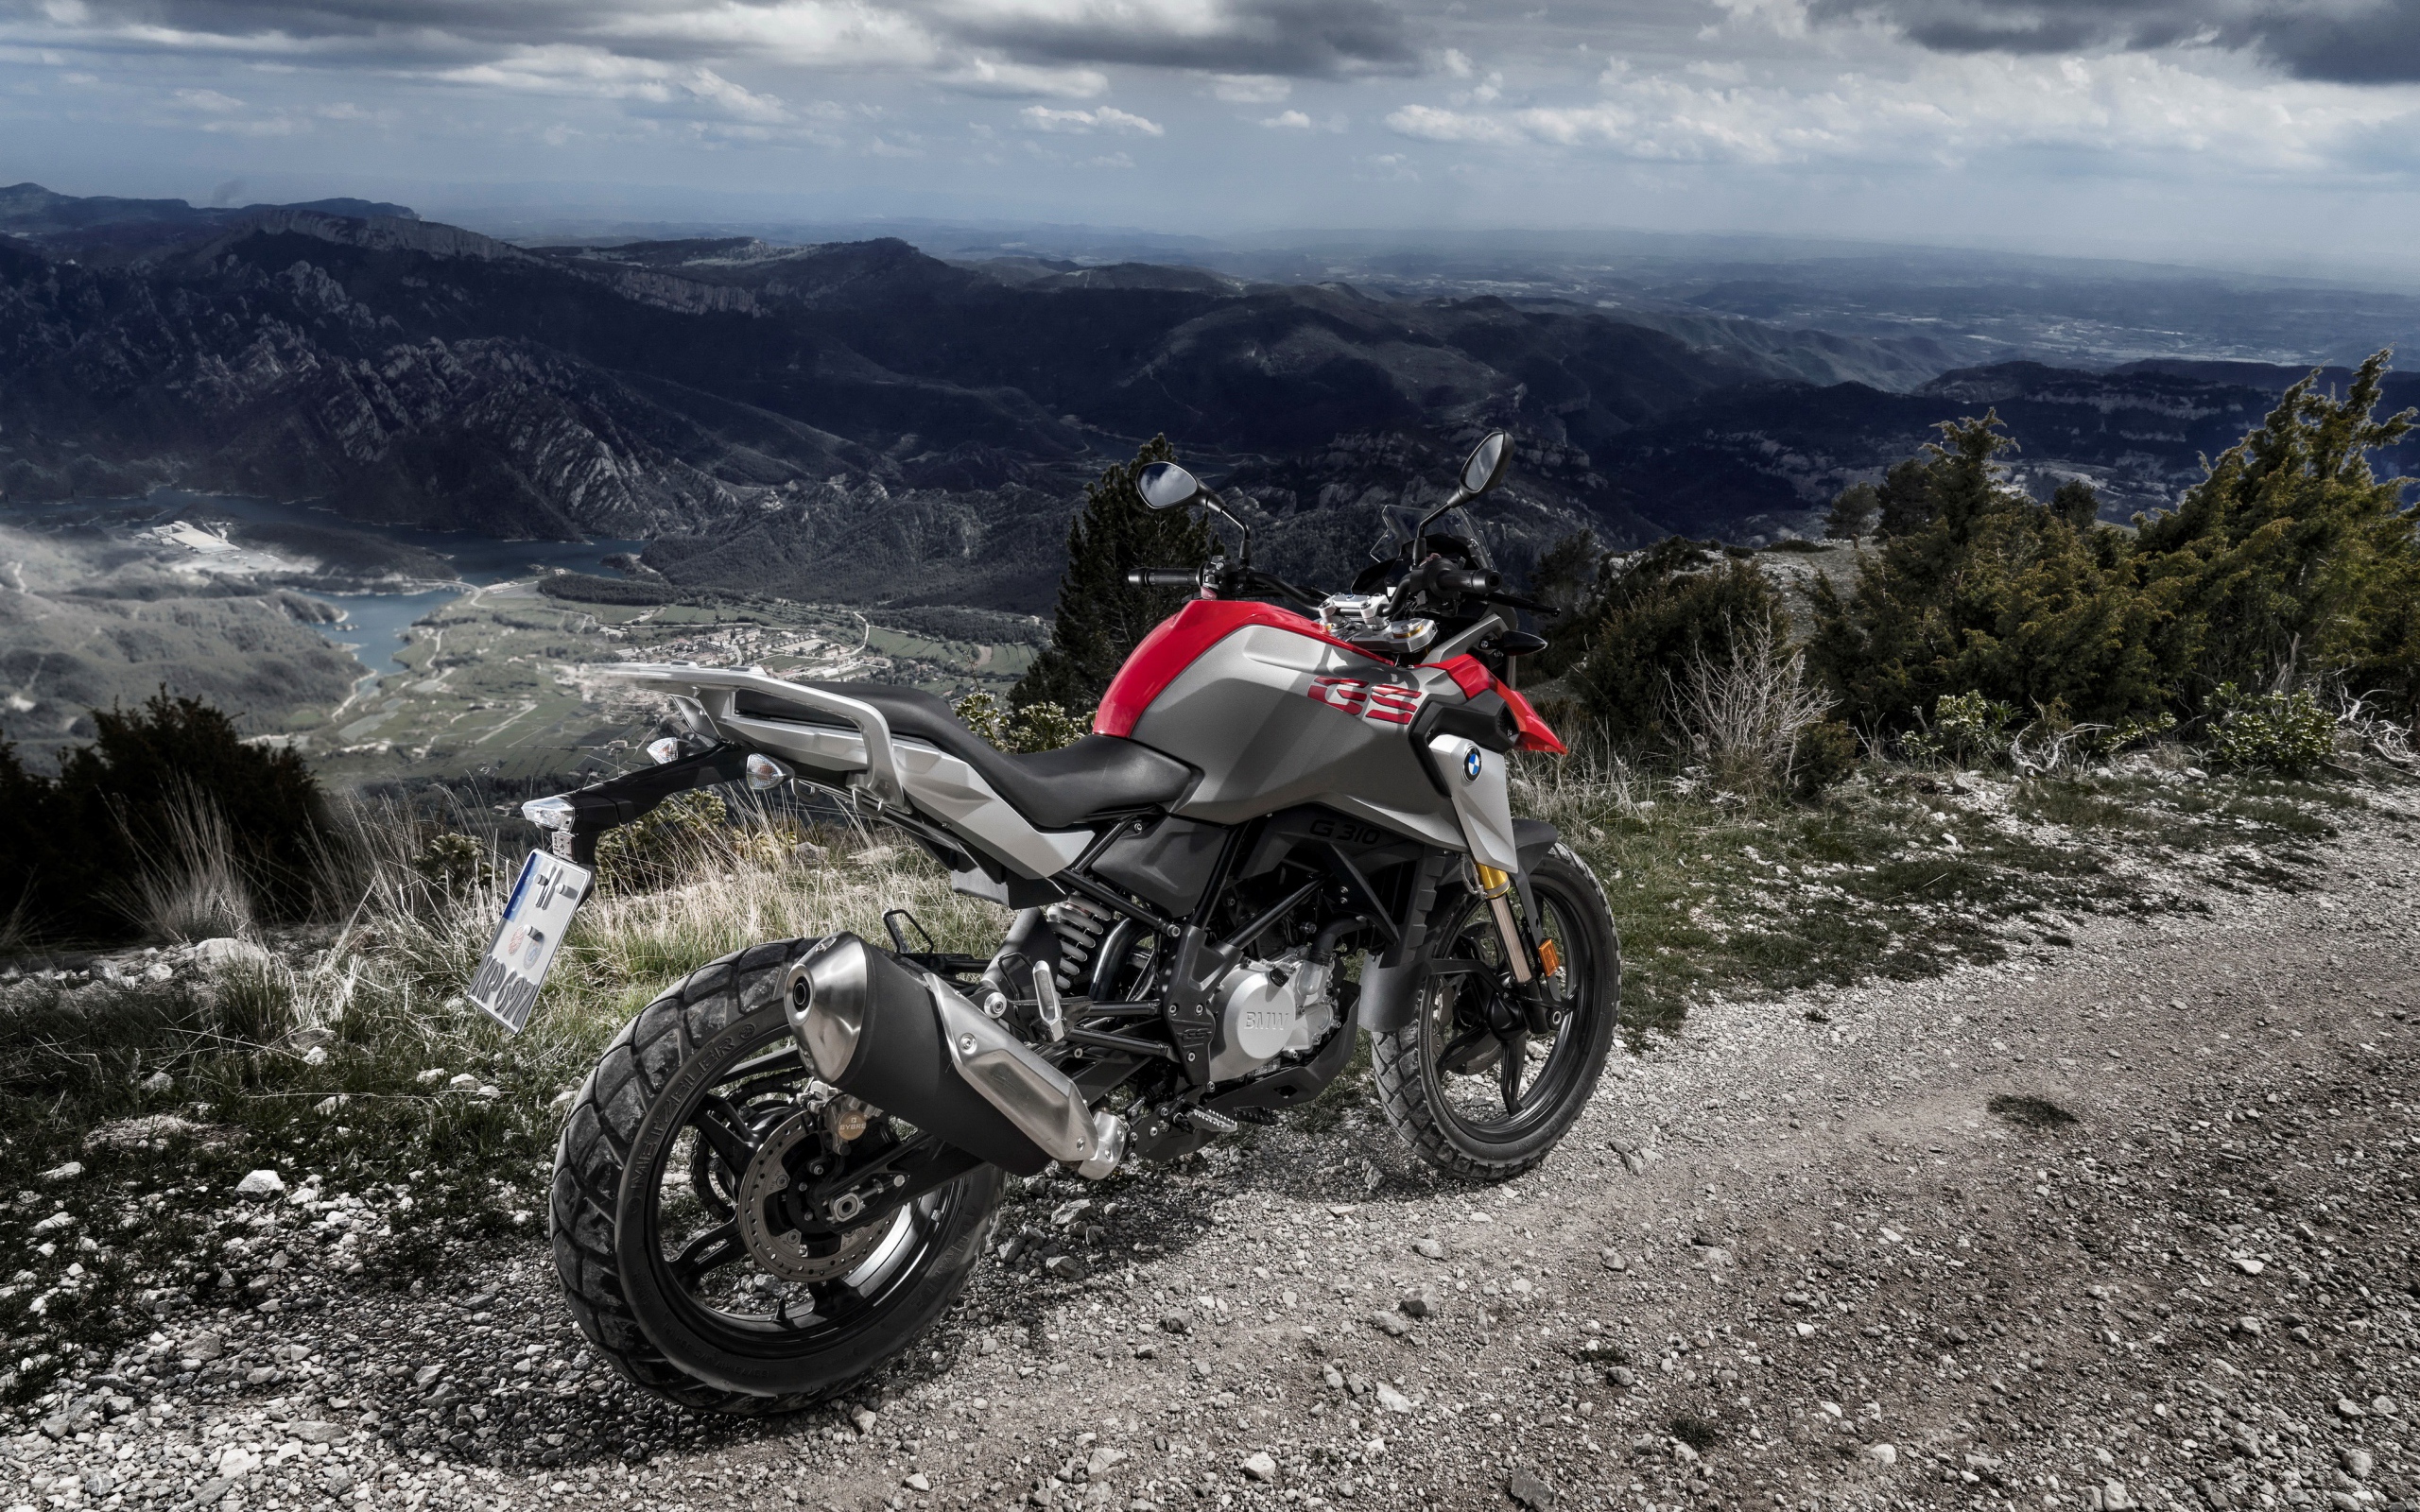 Спортивный мотоцикл BMW G 310 GS, 2017 на фоне гор